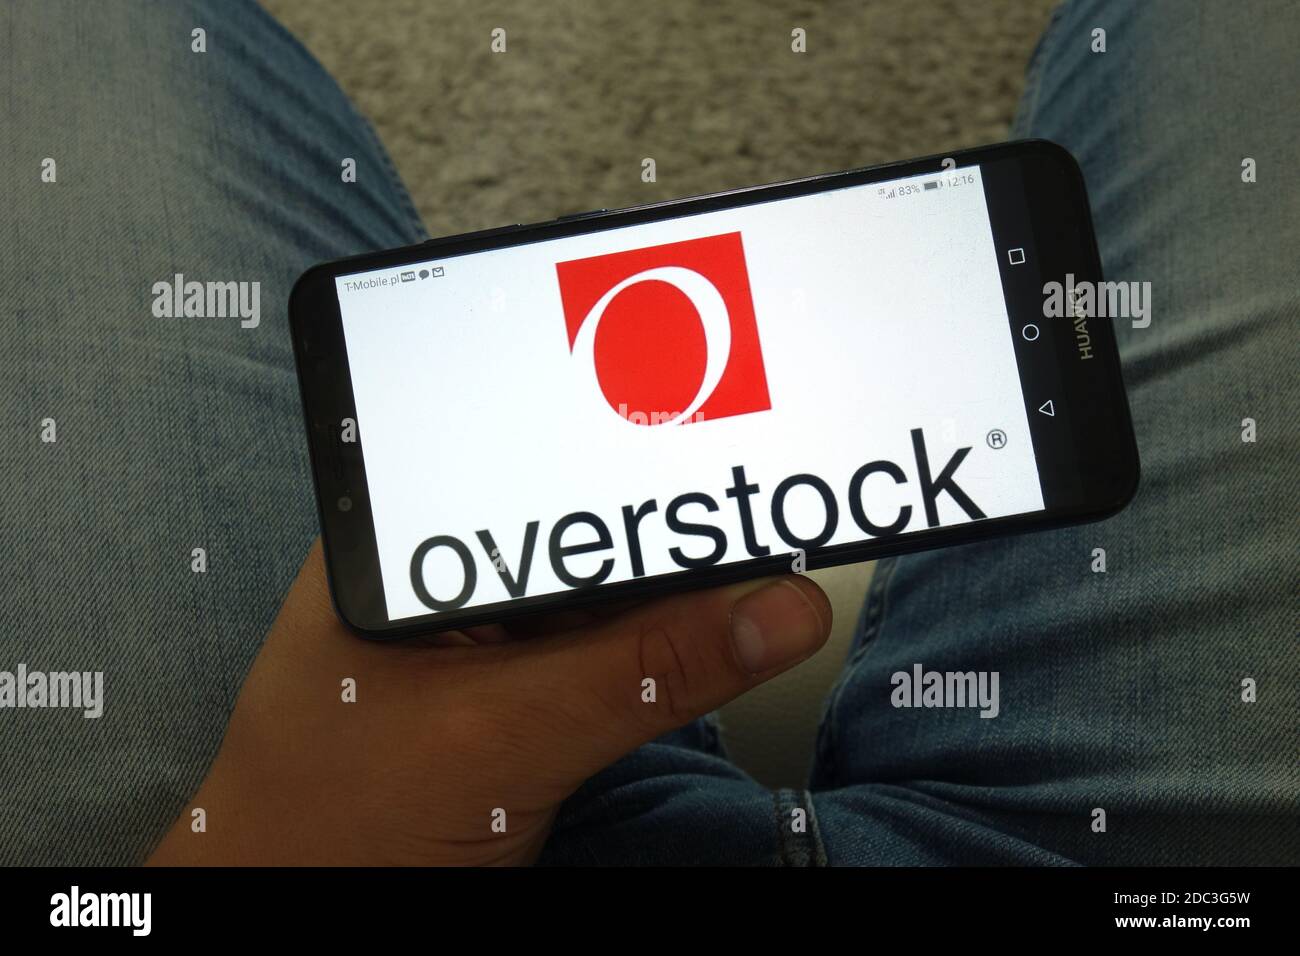 KONSKIE, POLAND - June 29, 2019: Overstock.com Inc logo displayed on mobile phone Stock Photo